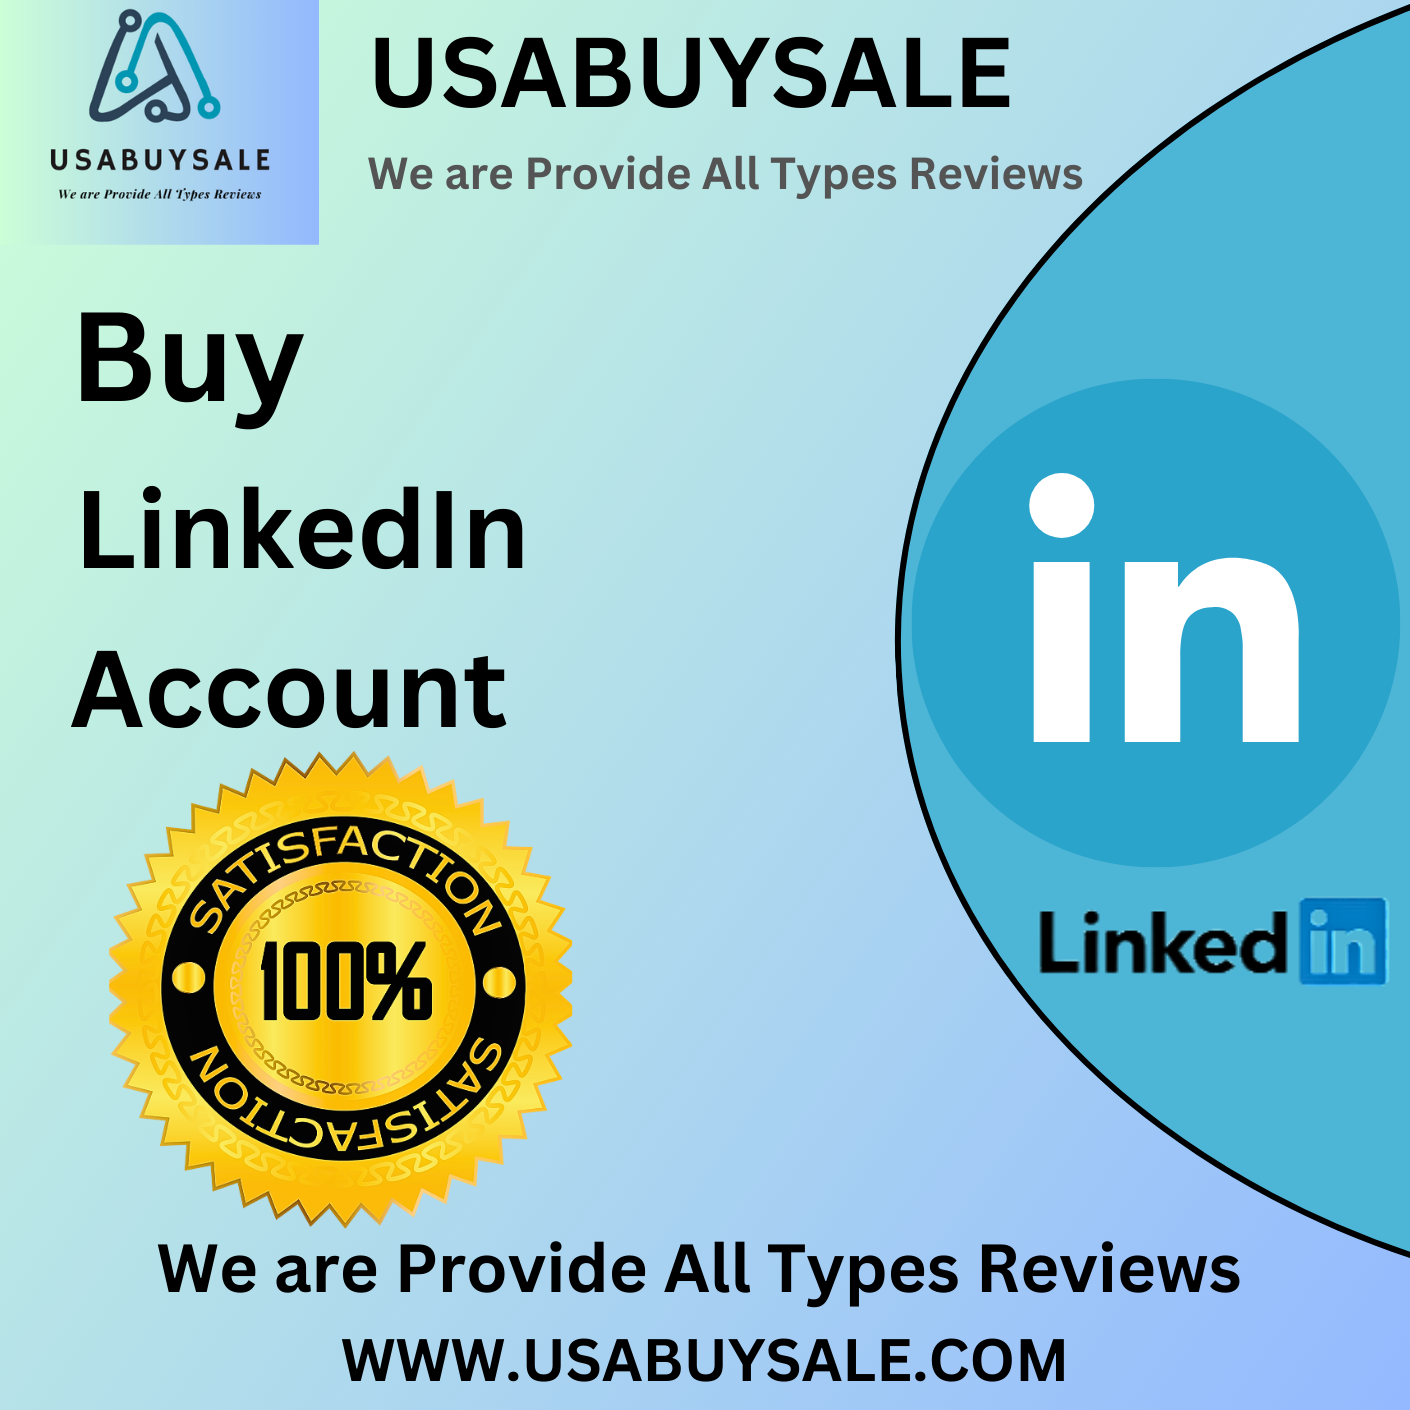 Buy LinkedIn Account - 100% USA Verified Accounts